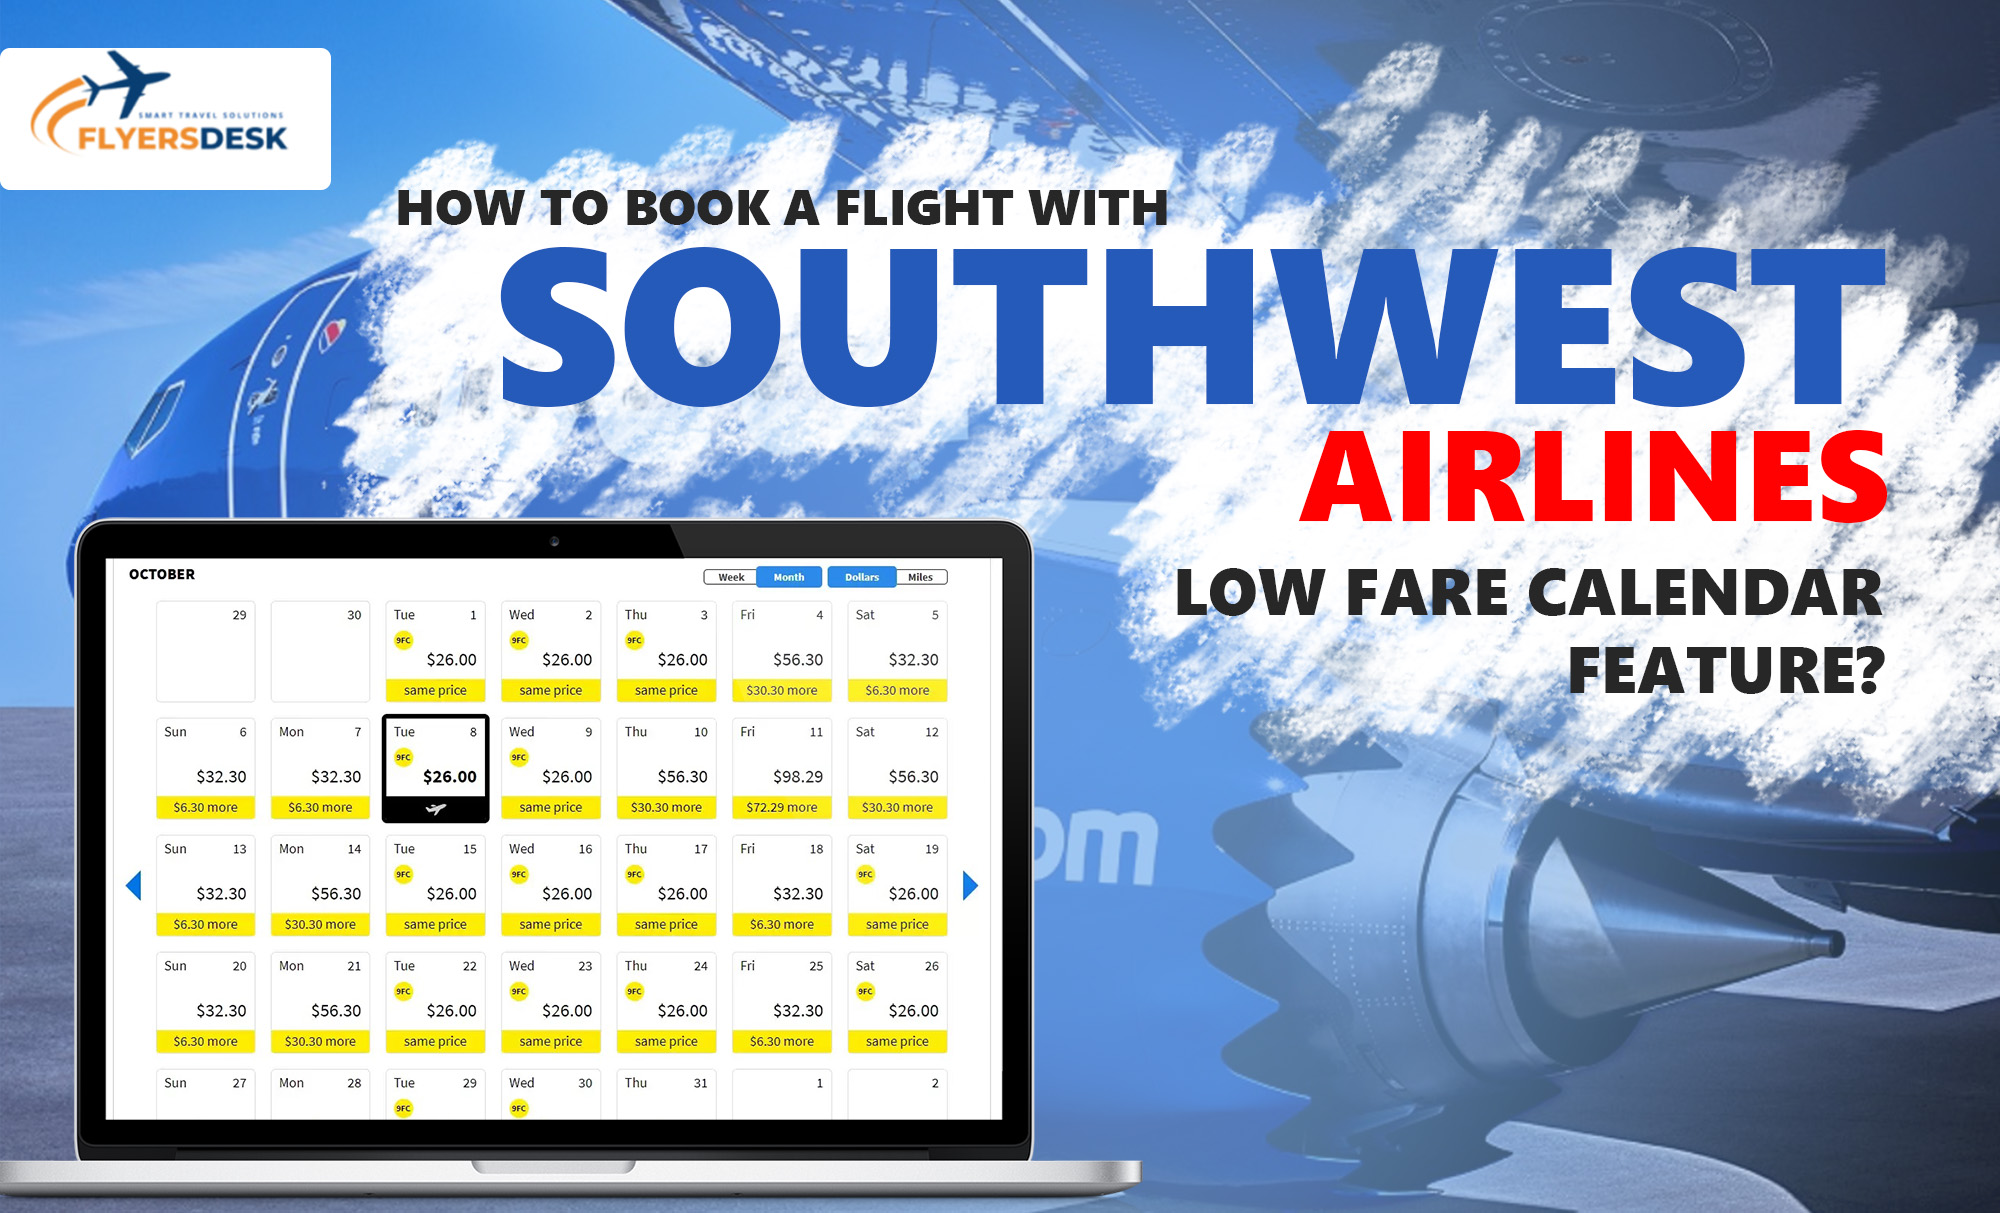 Southwest Airlines Low fare calendar